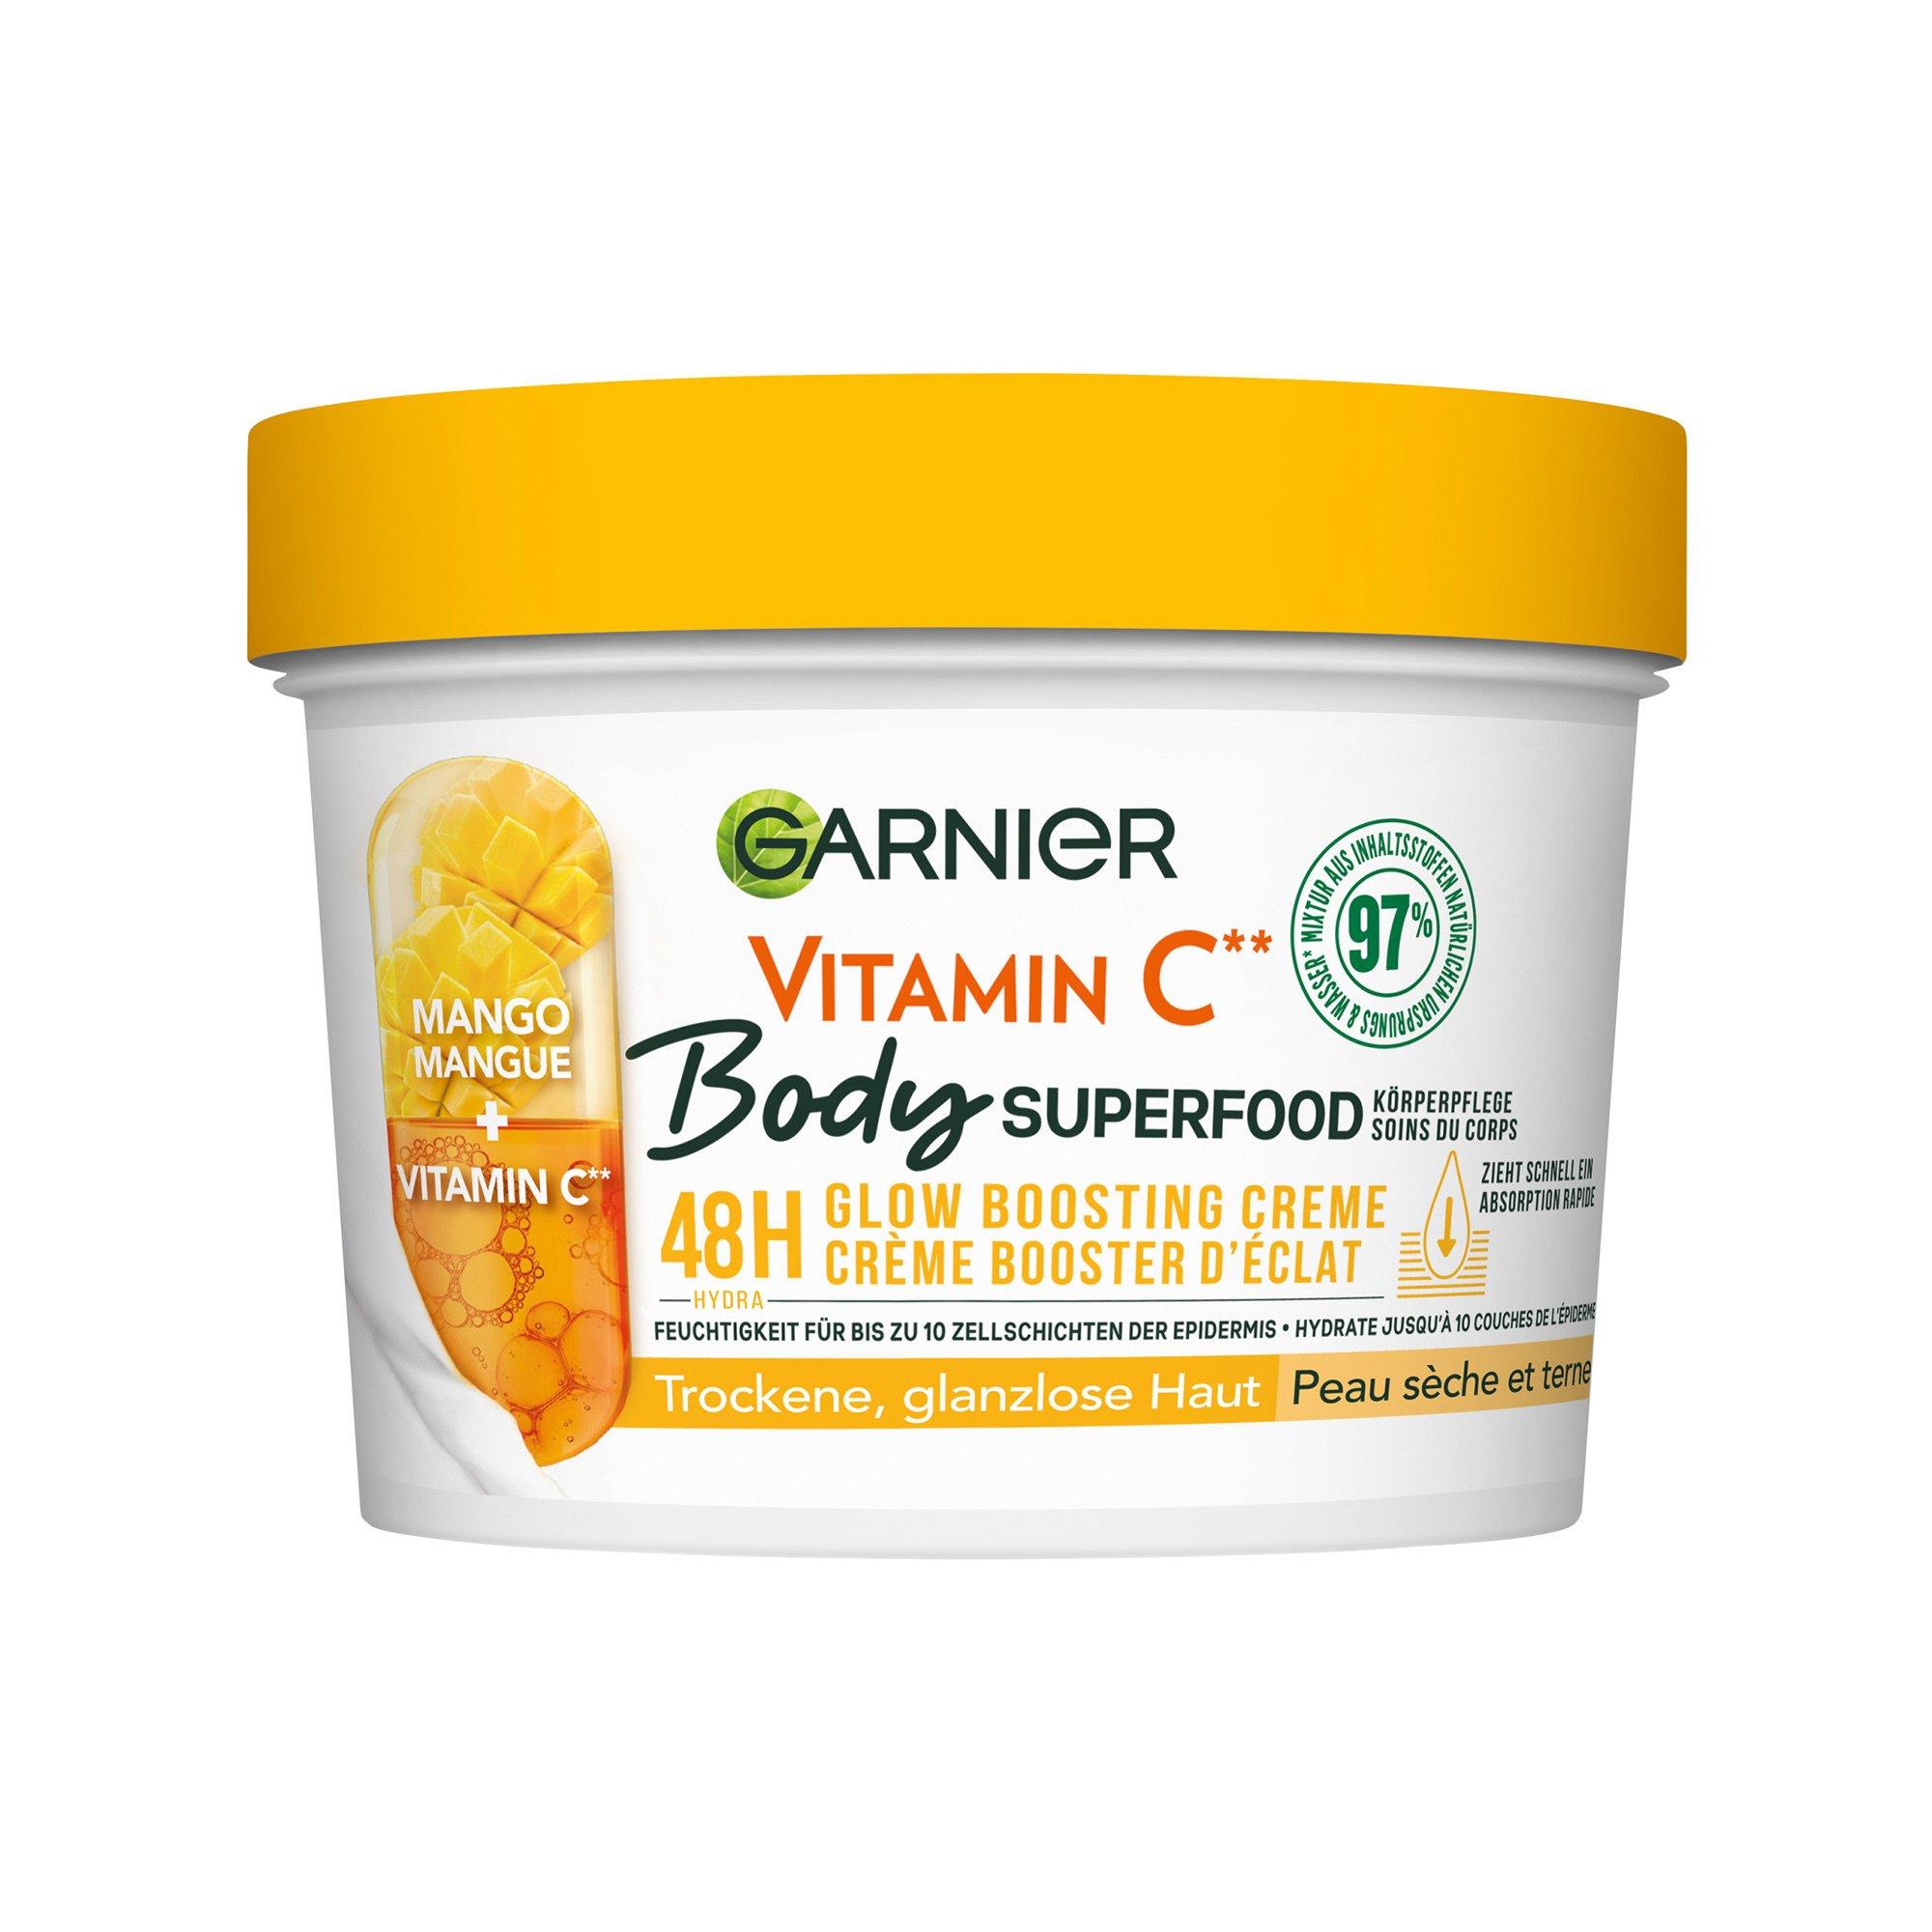 GARNIER Superfood Vitamin C & Mango Body Superfood Mango Vitamin C soin du corps 